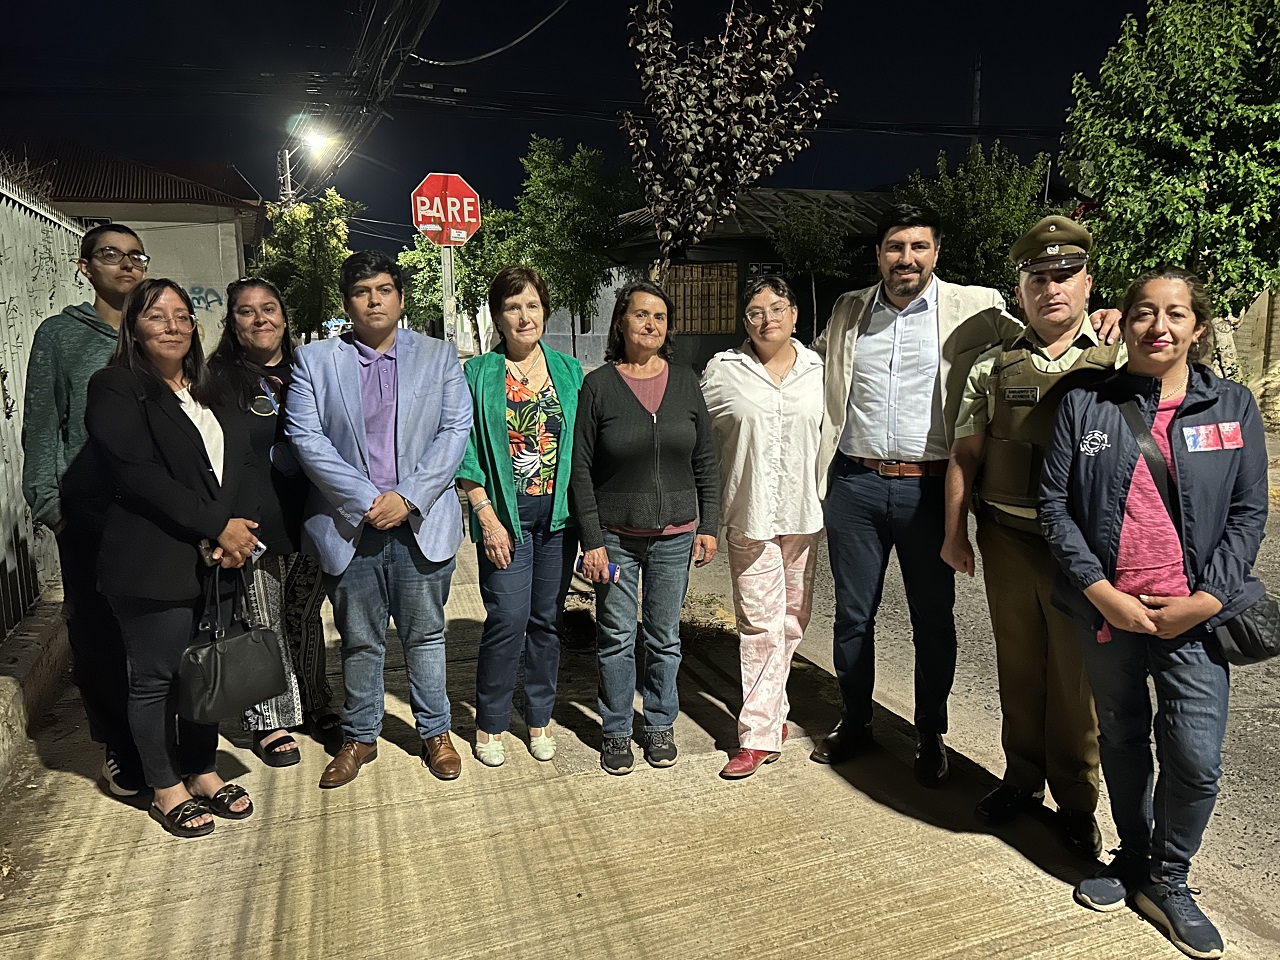 SAN FELIPE: Realizan Ronda Nocturna por sectores del centro de San Felipe